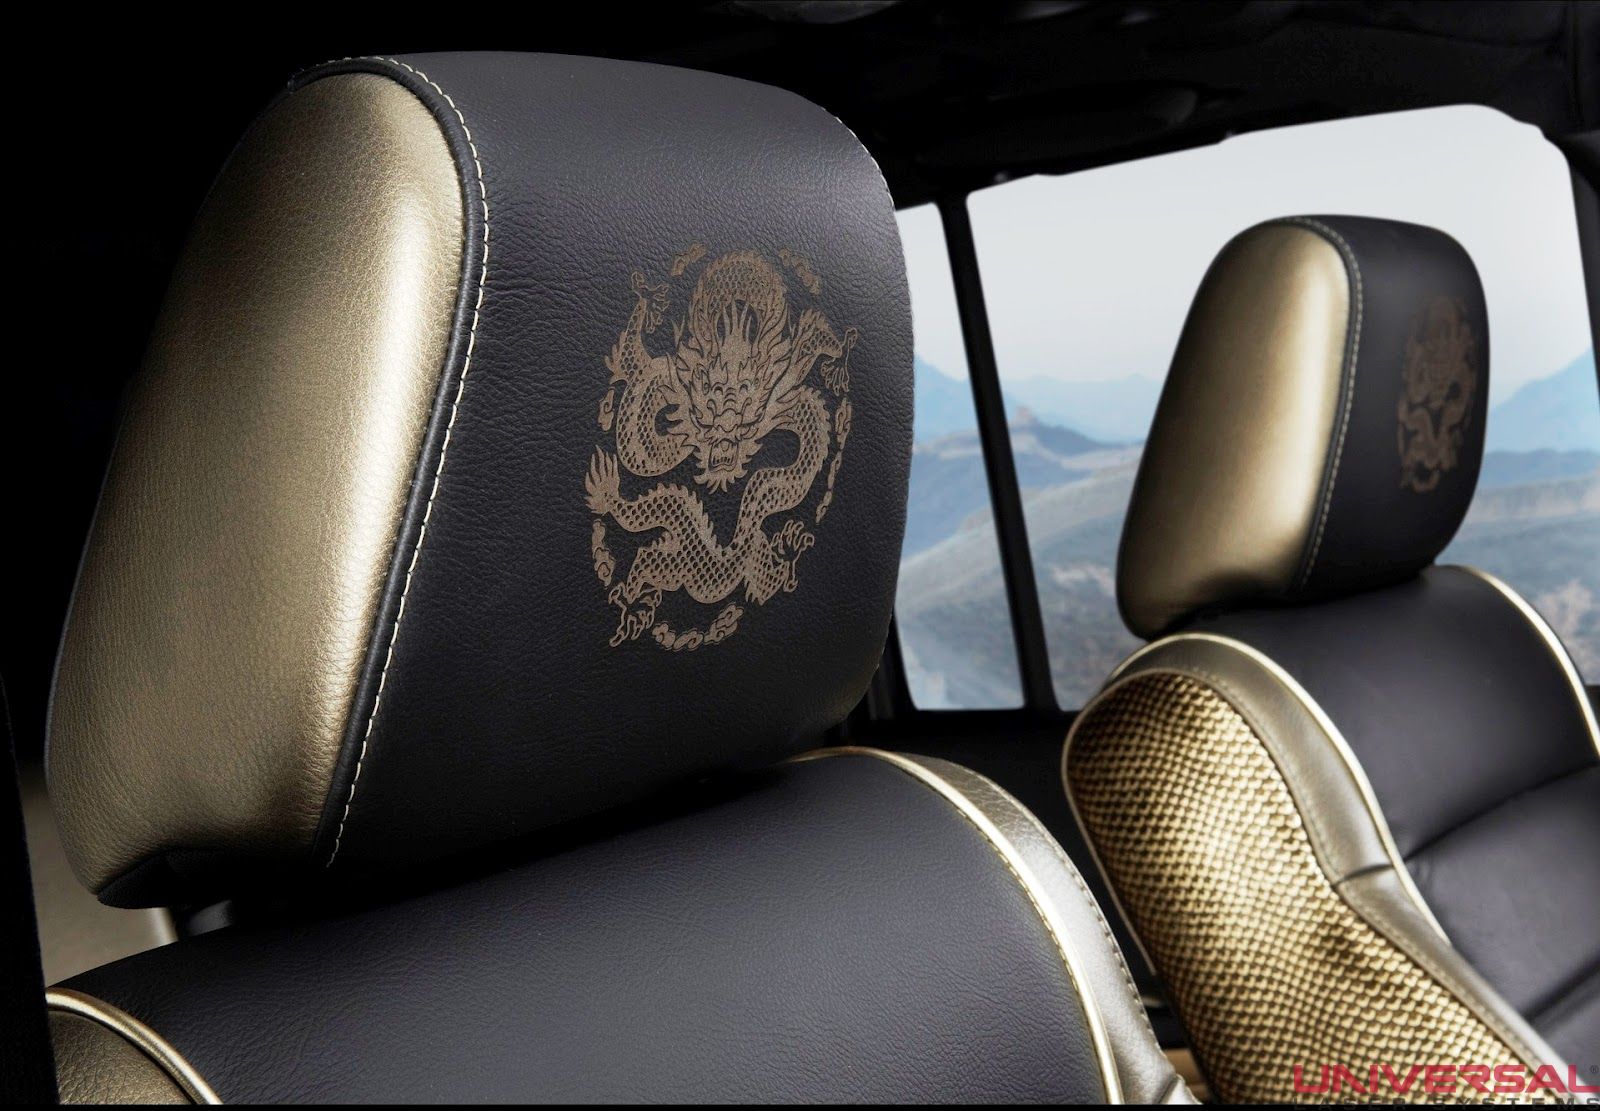 2012-Jeep-Wrangler-Dragon-Design-Concept-Headrest-1920x1440.jpg